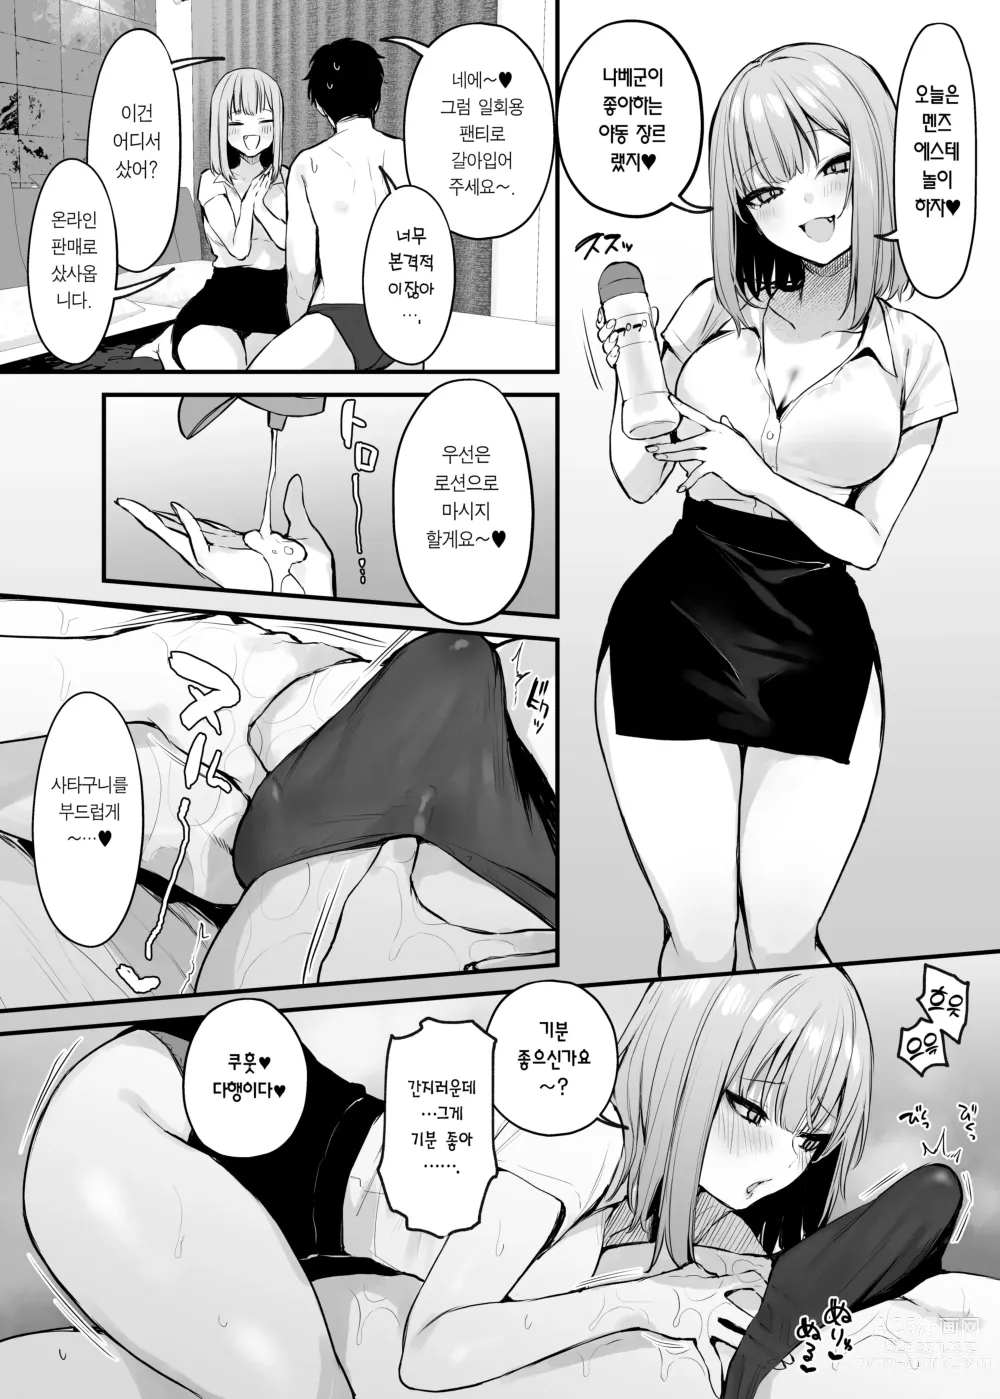 Page 86 of doujinshi 전남친이랑은 경험 못한 섹스 해봐도 되나요?